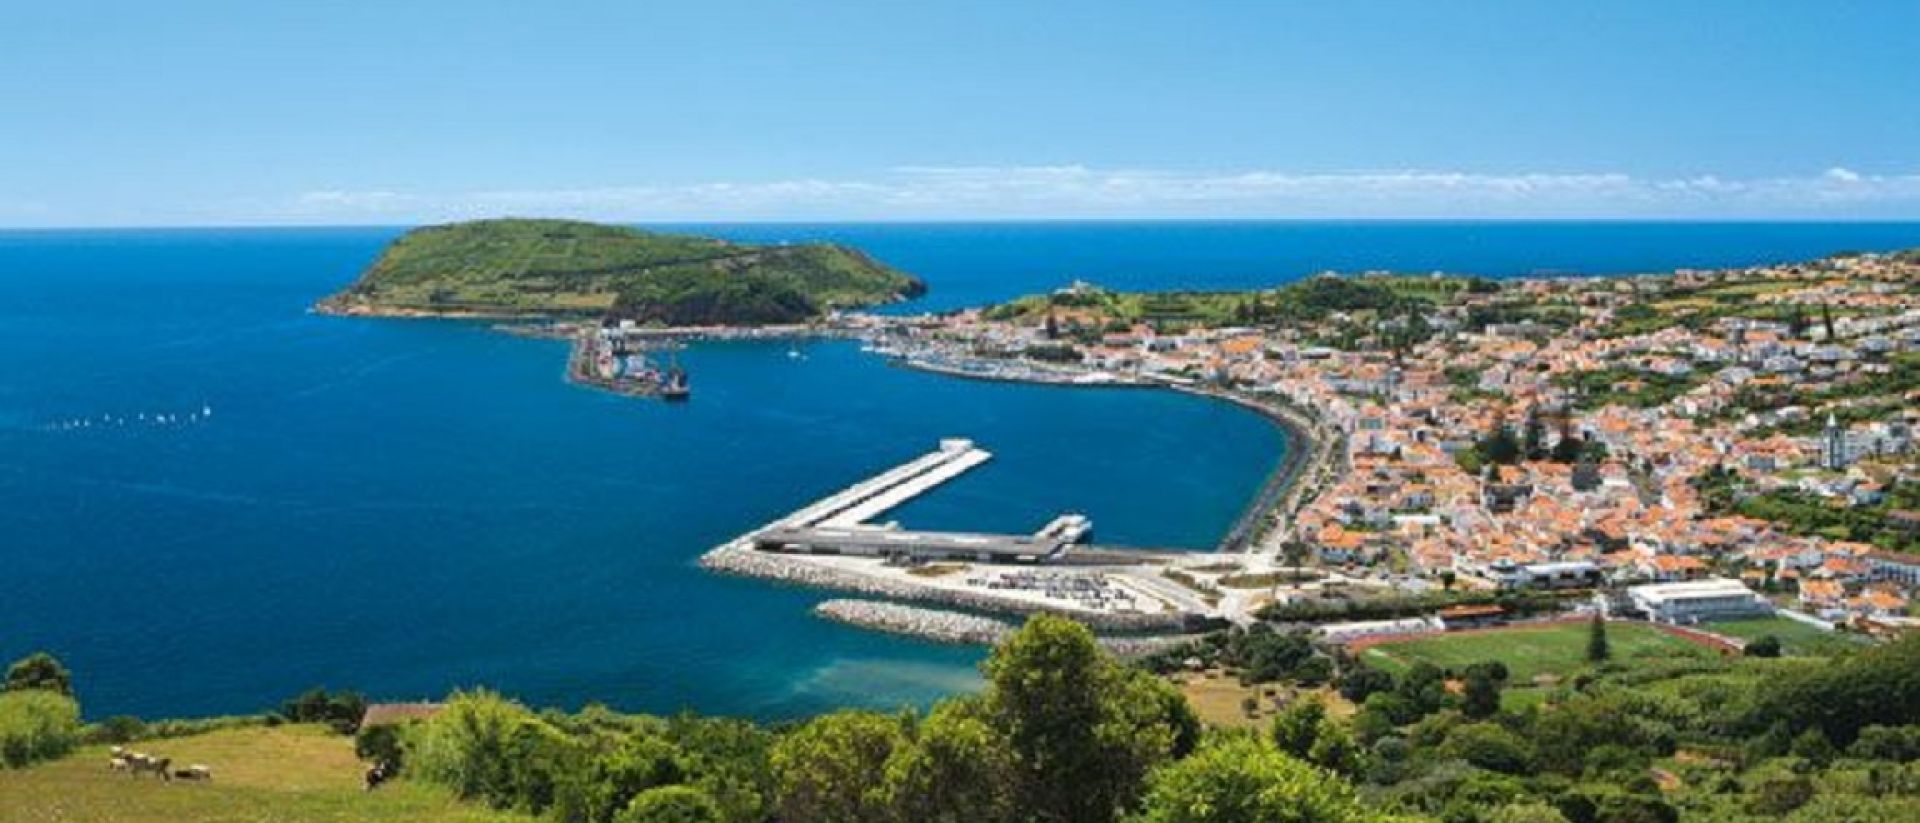 Taxa turística dos Açores revogada